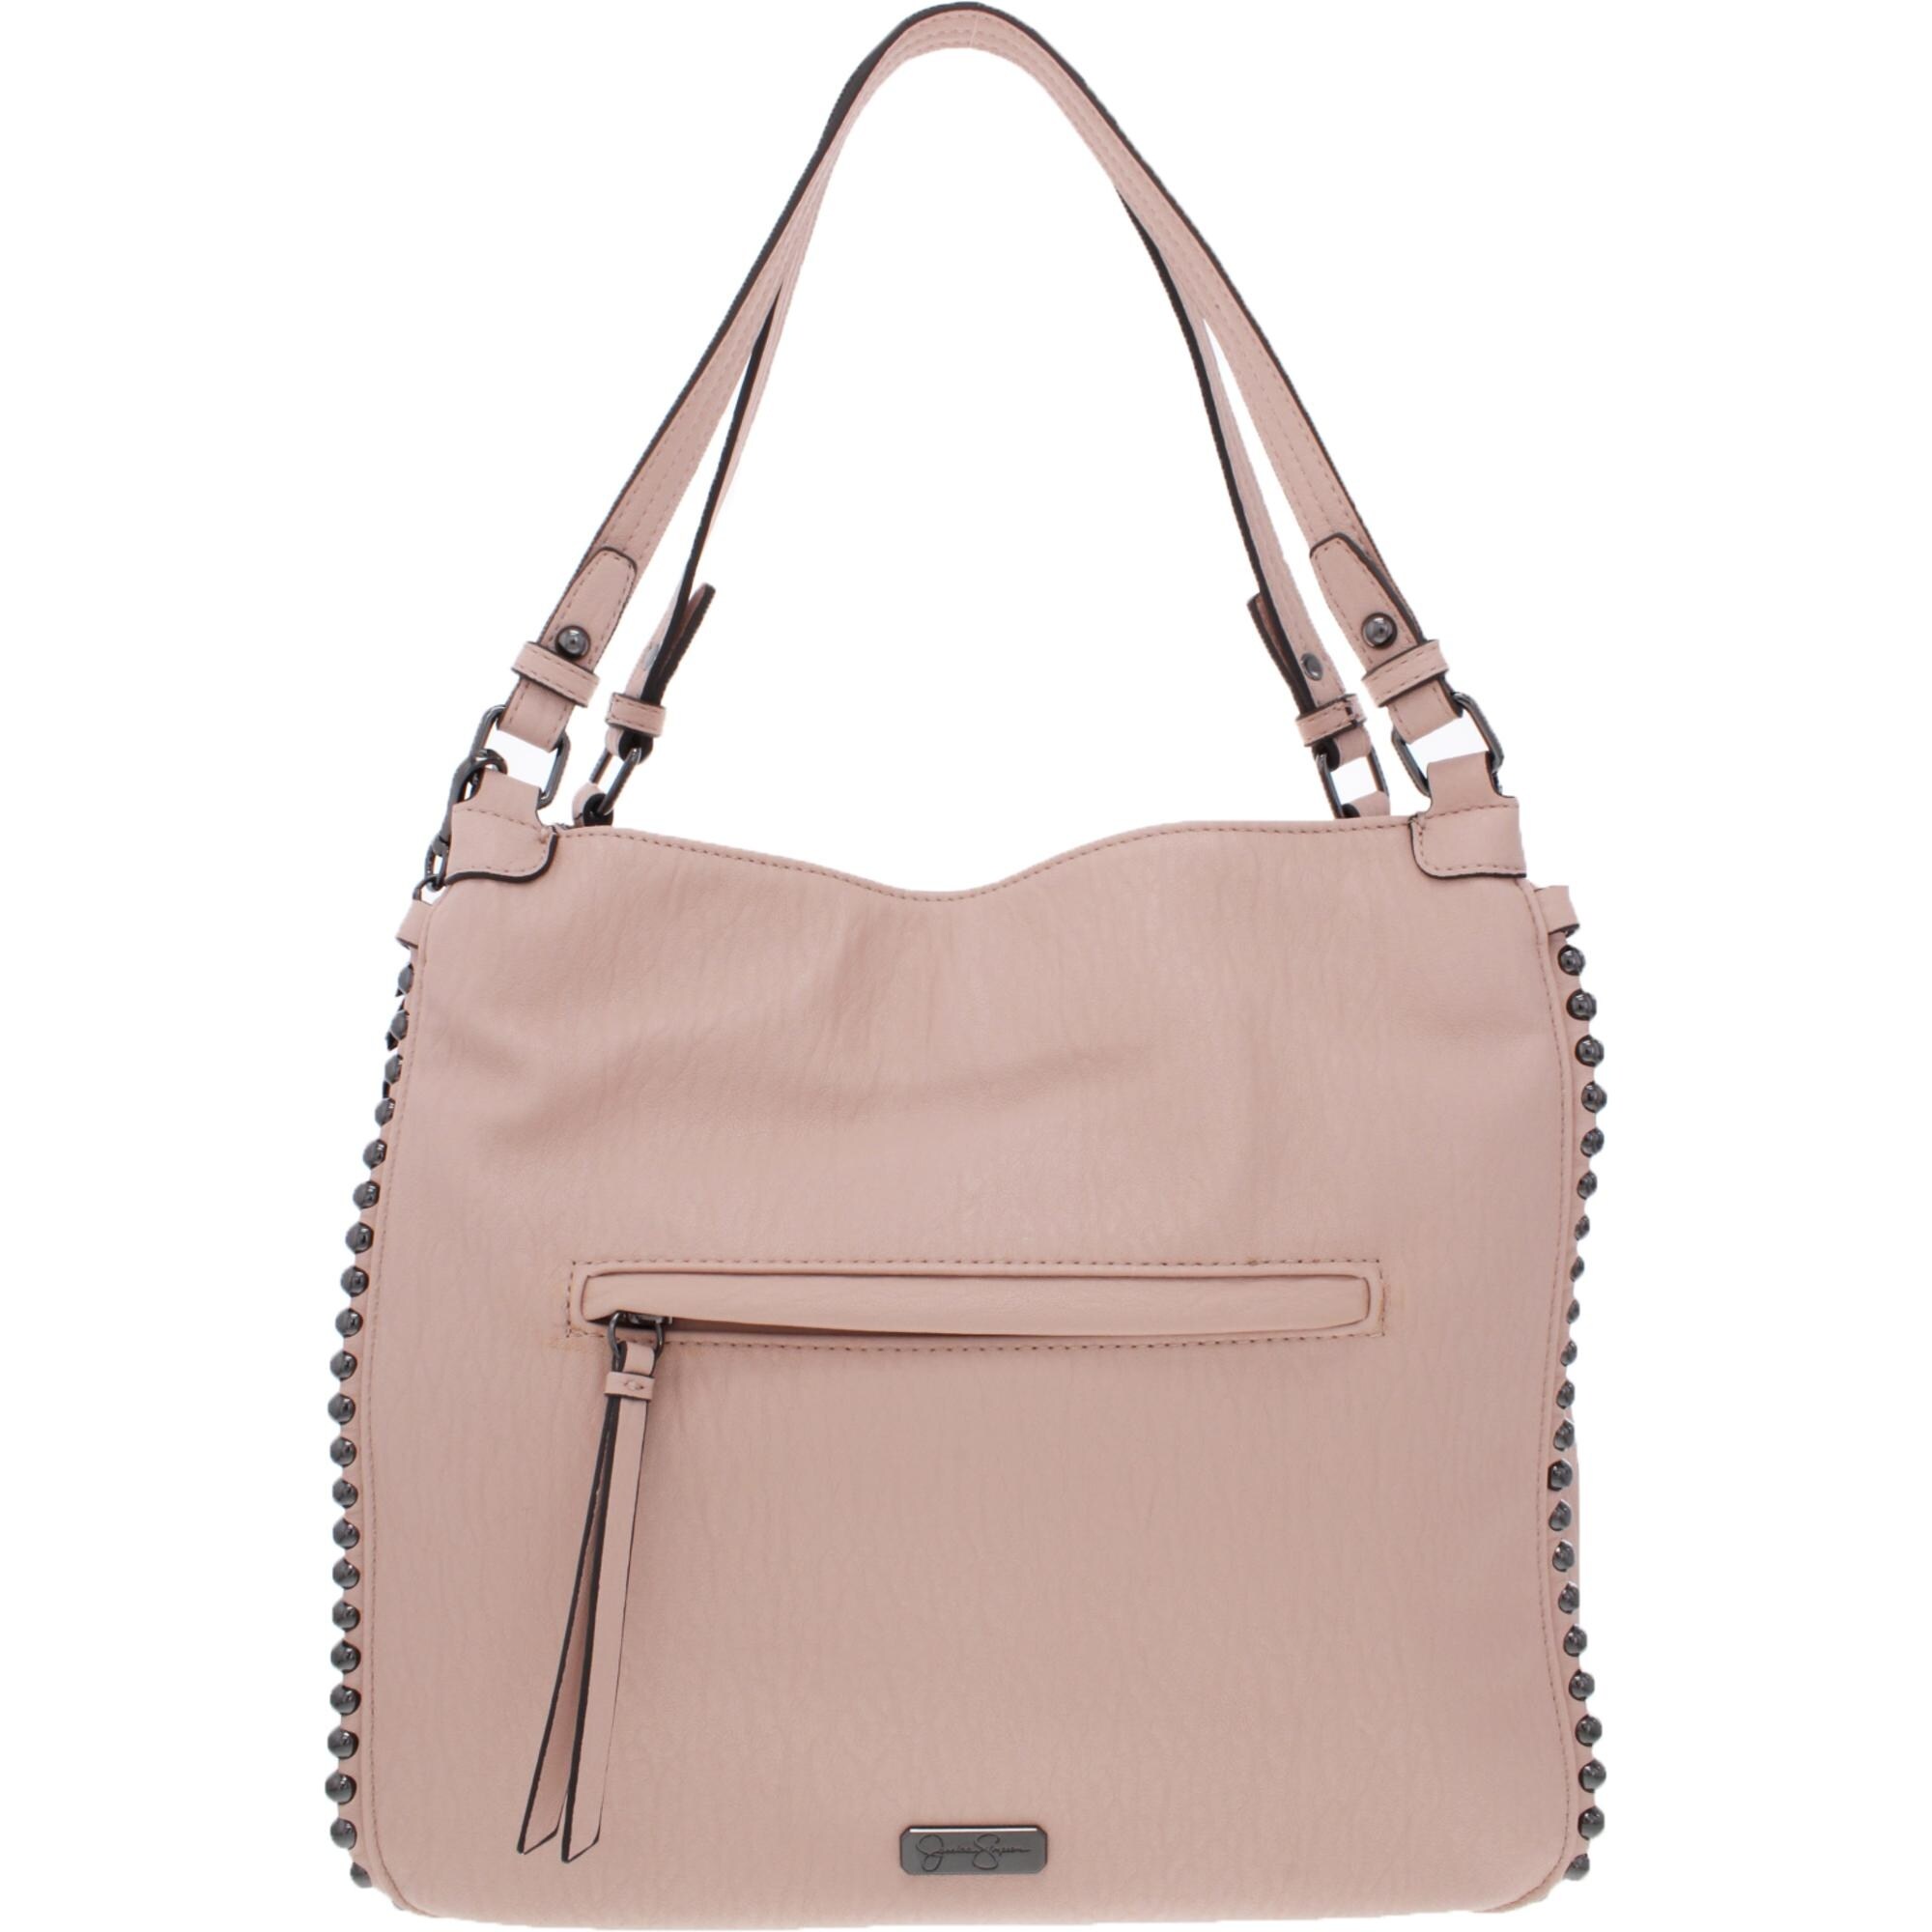 jessica simpson pink handbag